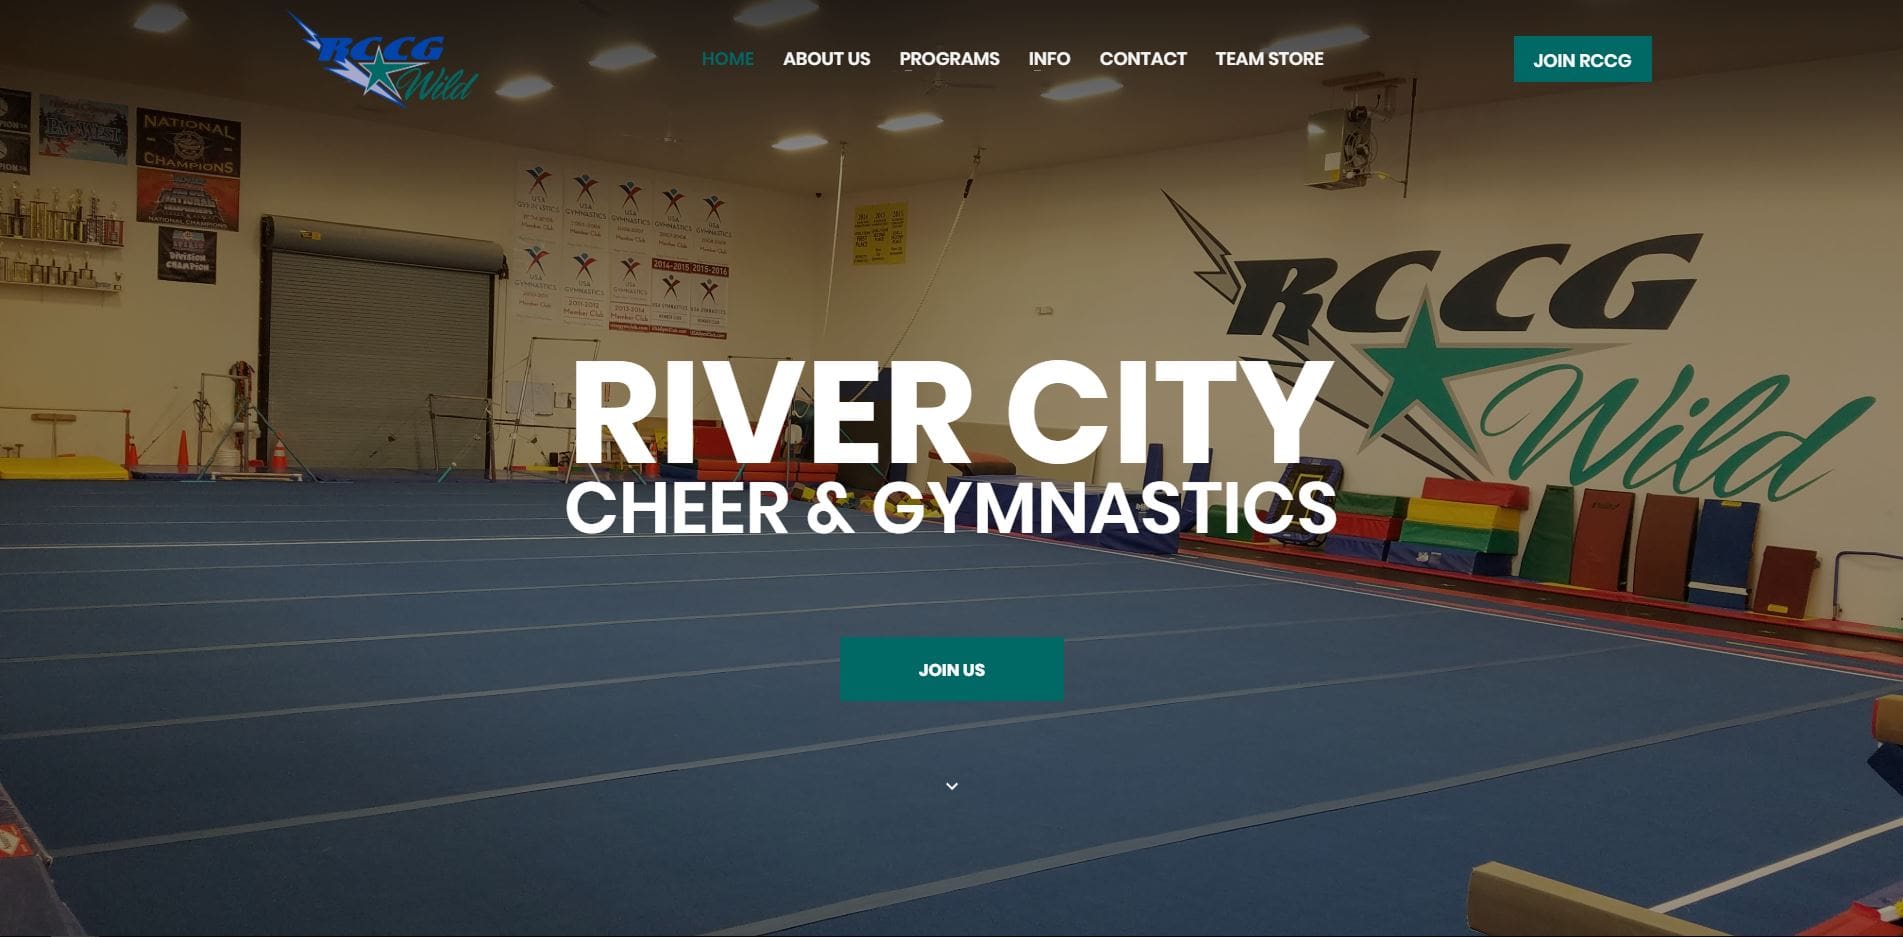 River City Cheer & Gymnastics Web Design